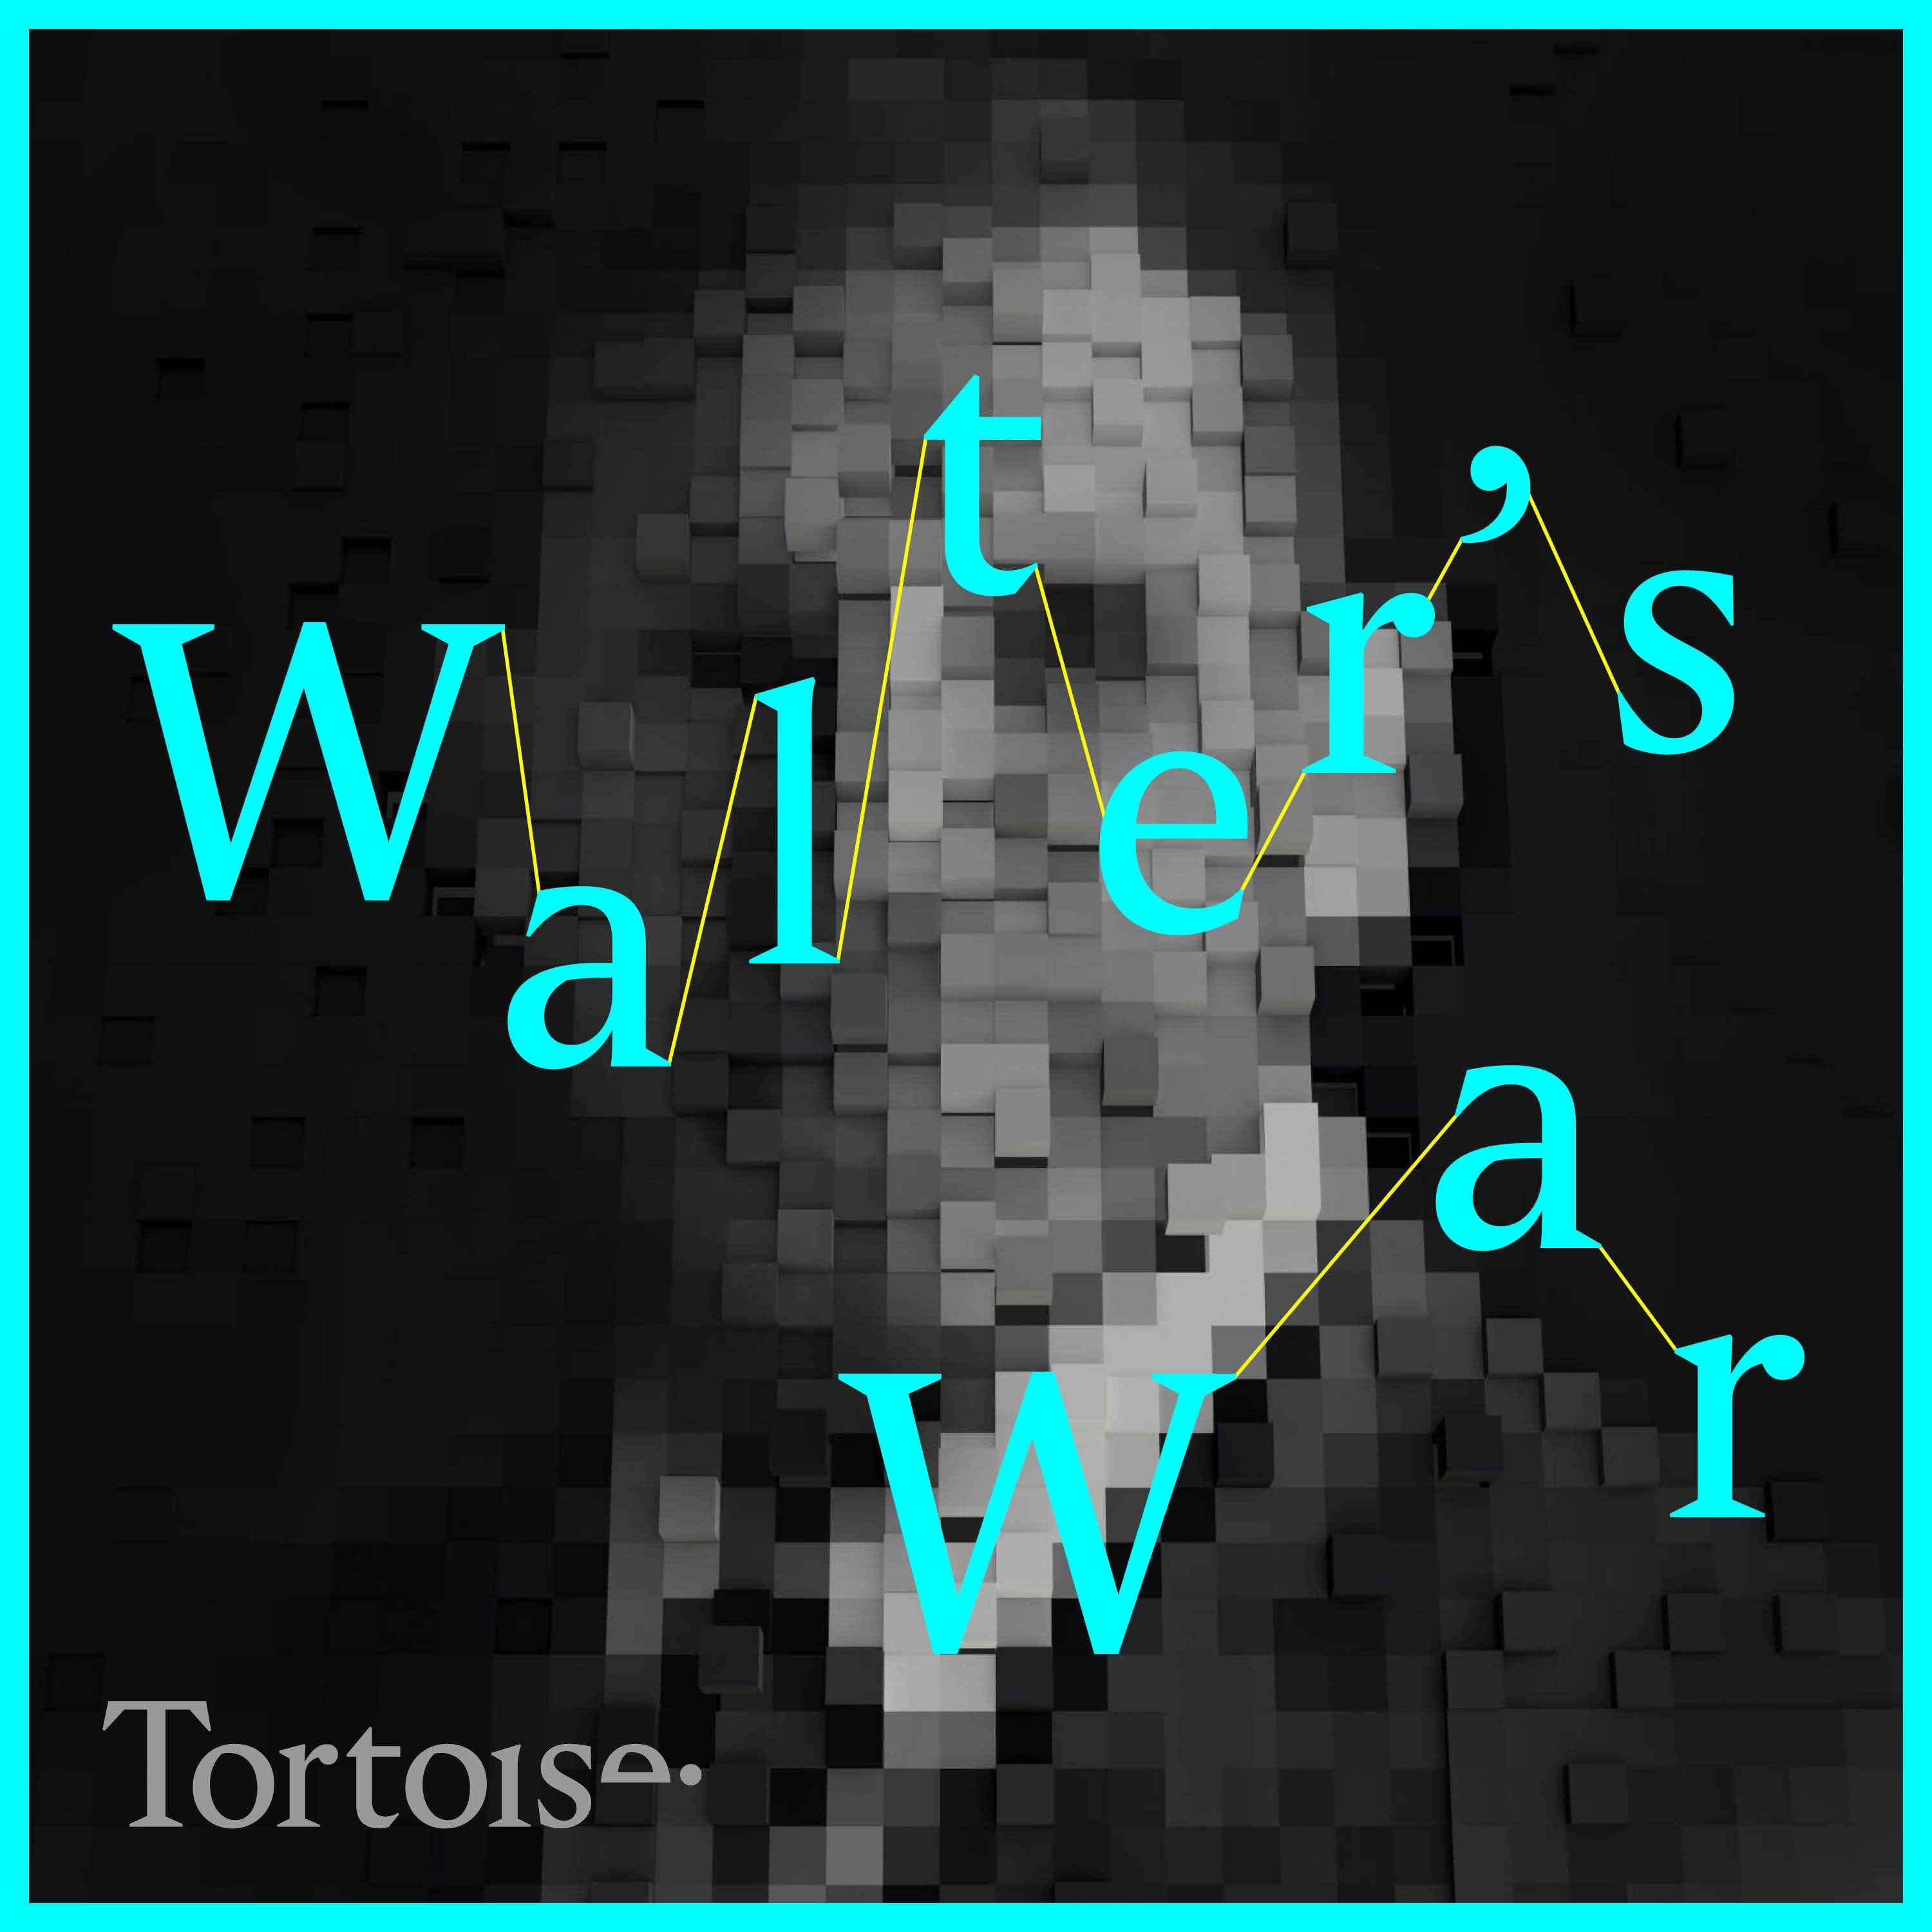 Introducing...Walter’s War